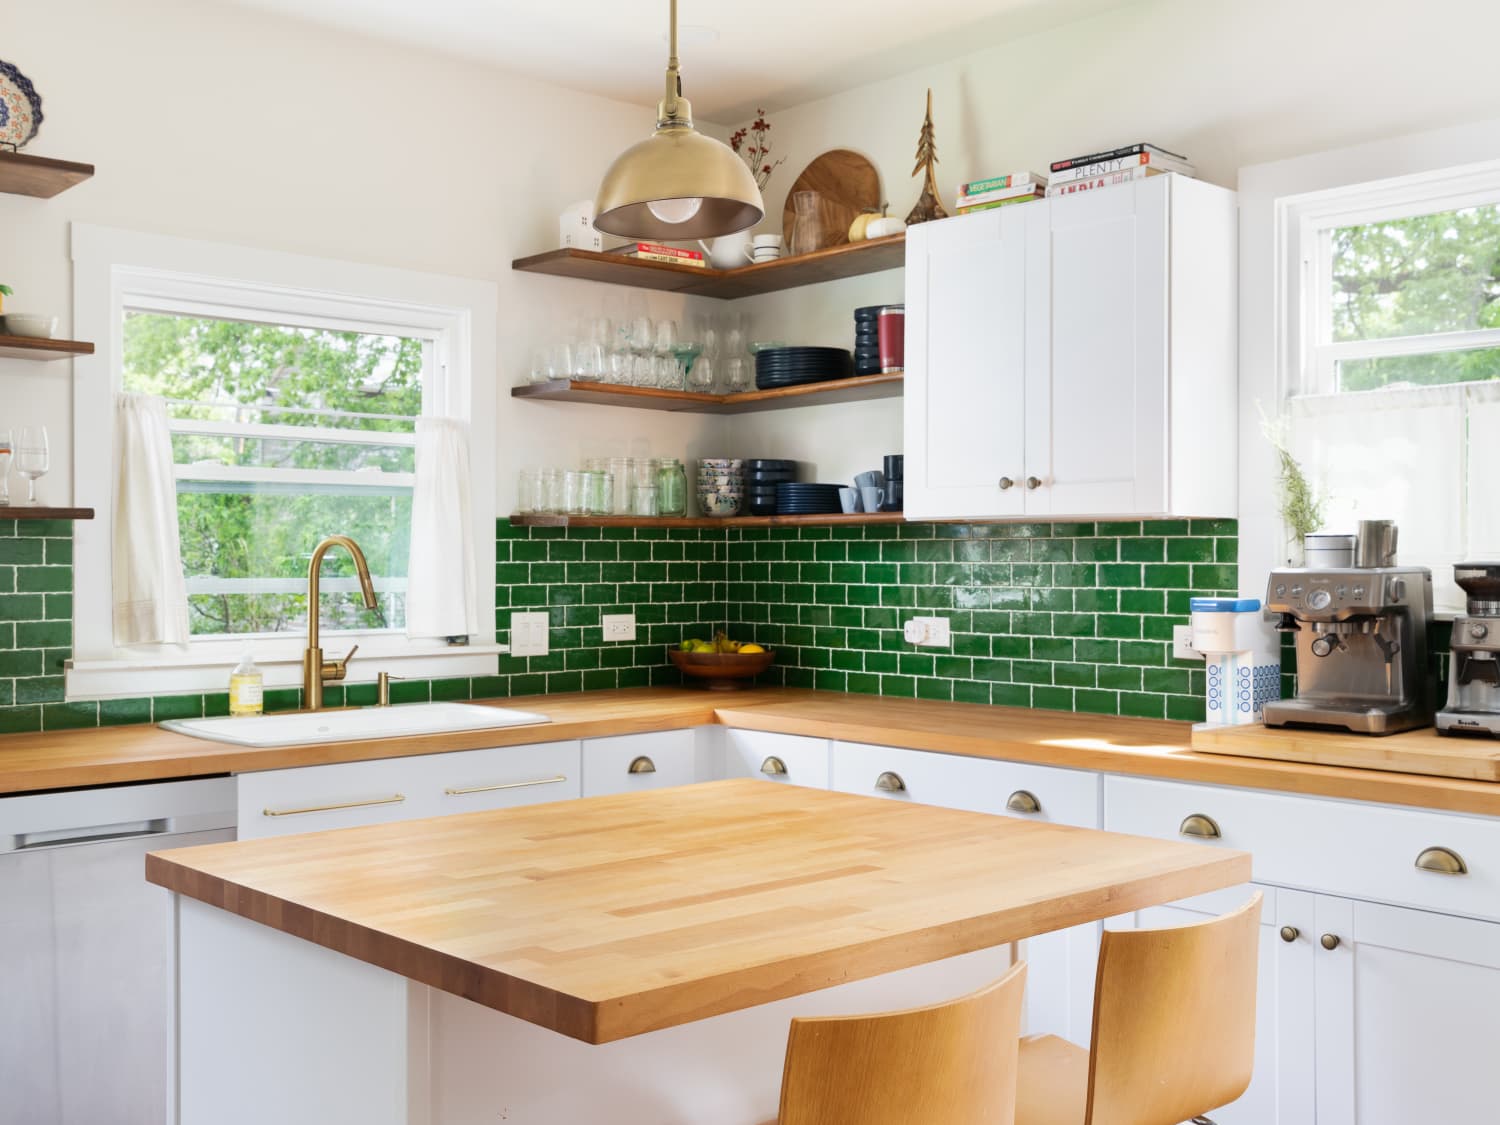 9 Kitchen Backsplash Ideas You'll Love